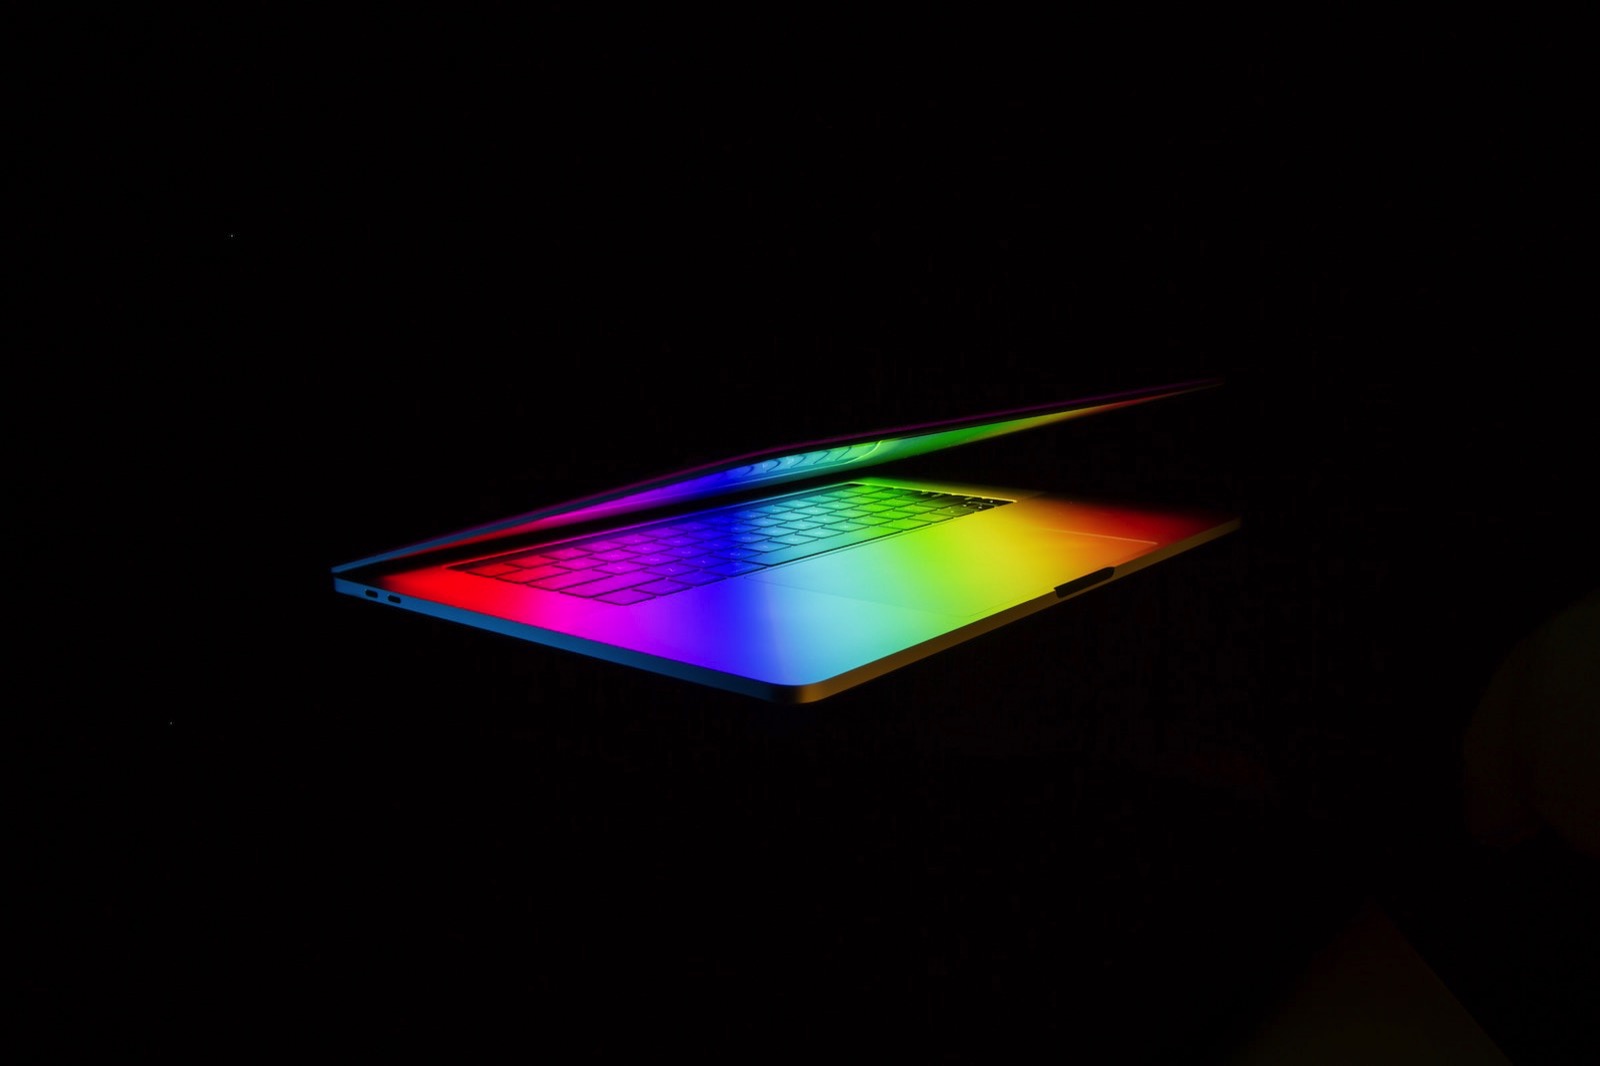 ash-edmonds-490789-unsplash-macbook-pro-rainbow-dramatic.jpg